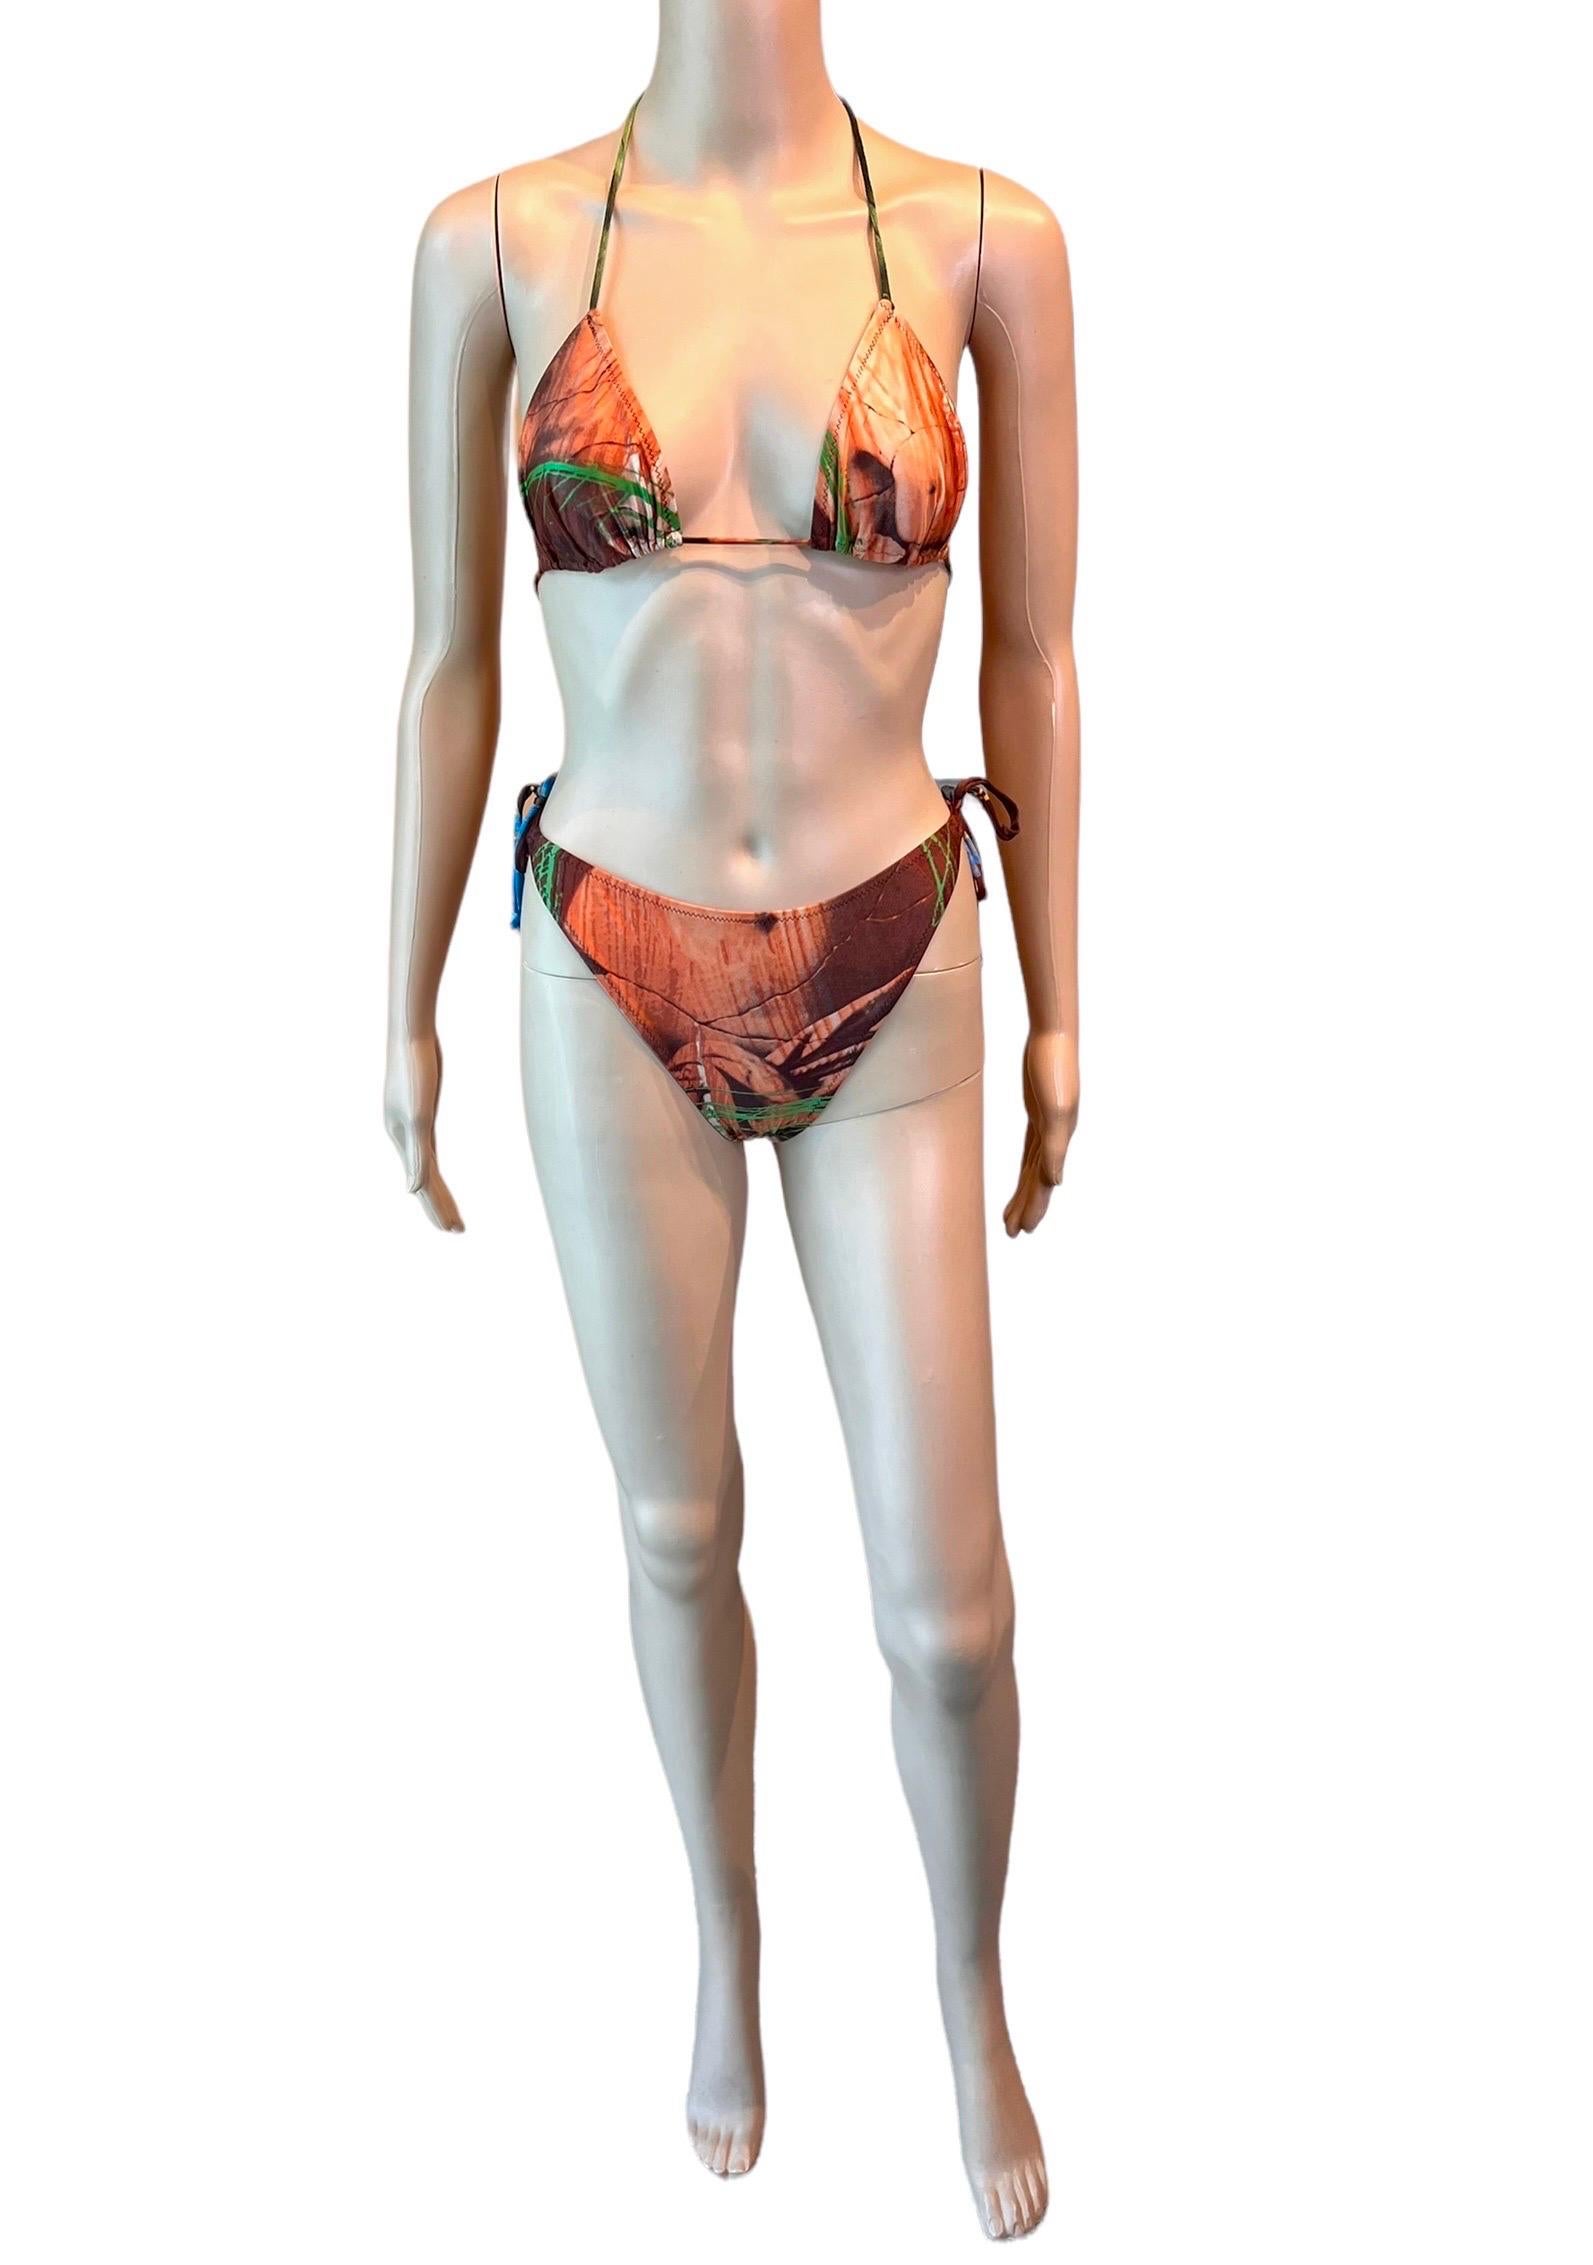 Jean Paul Gaultier S/S 1999 Venus de Milo Bikini Swimwear Swimsuit 2 Piece Set In Excellent Condition For Sale In Naples, FL